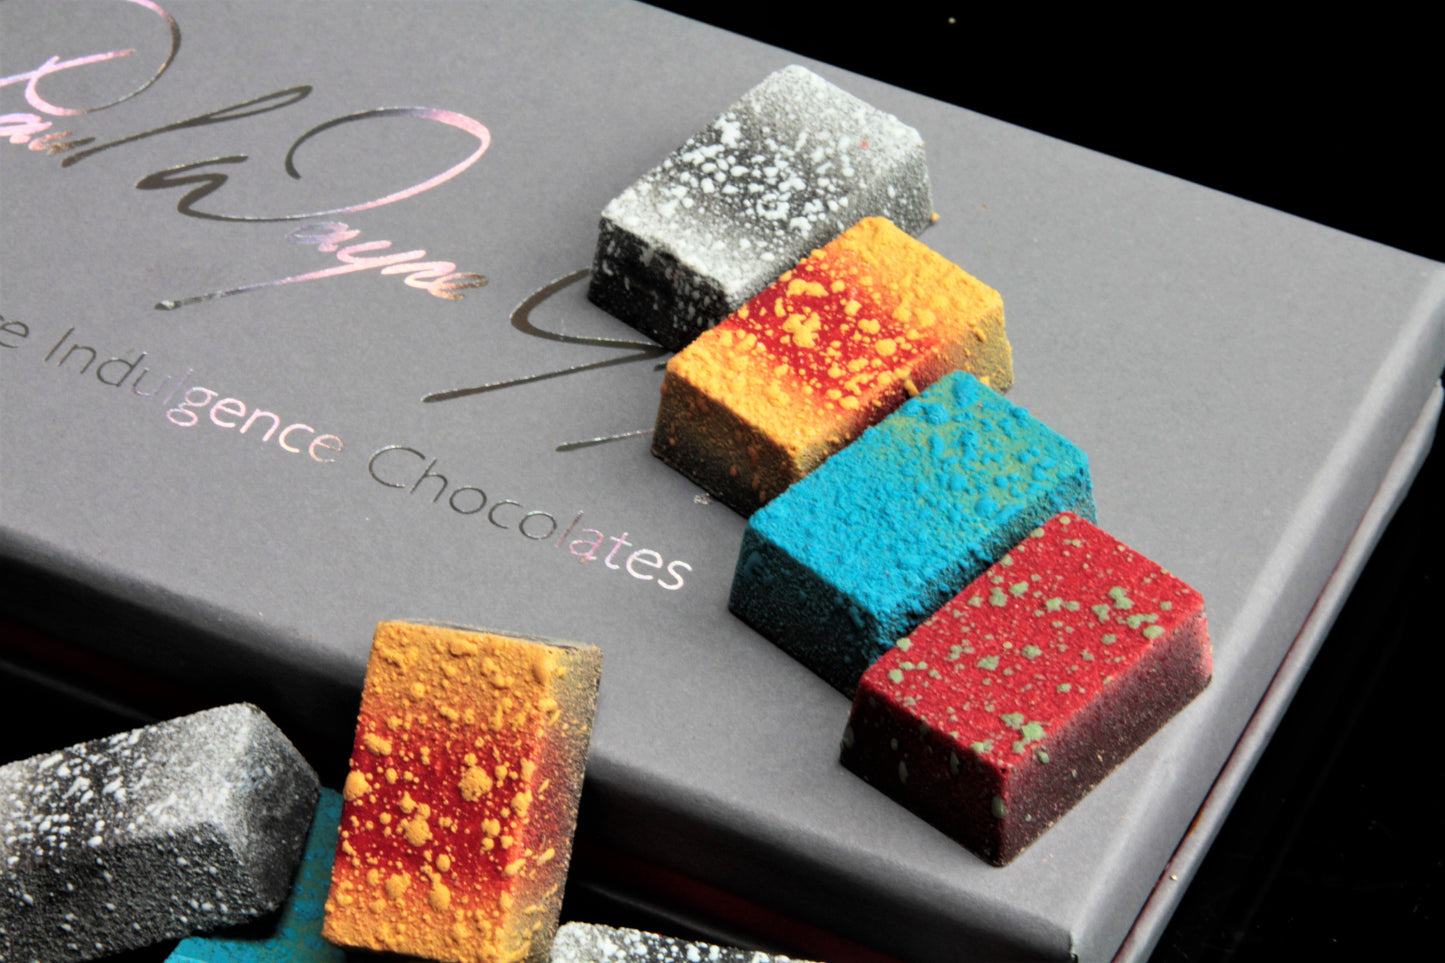 Art Range One - Box of 12 Hand Crafted Chocolates